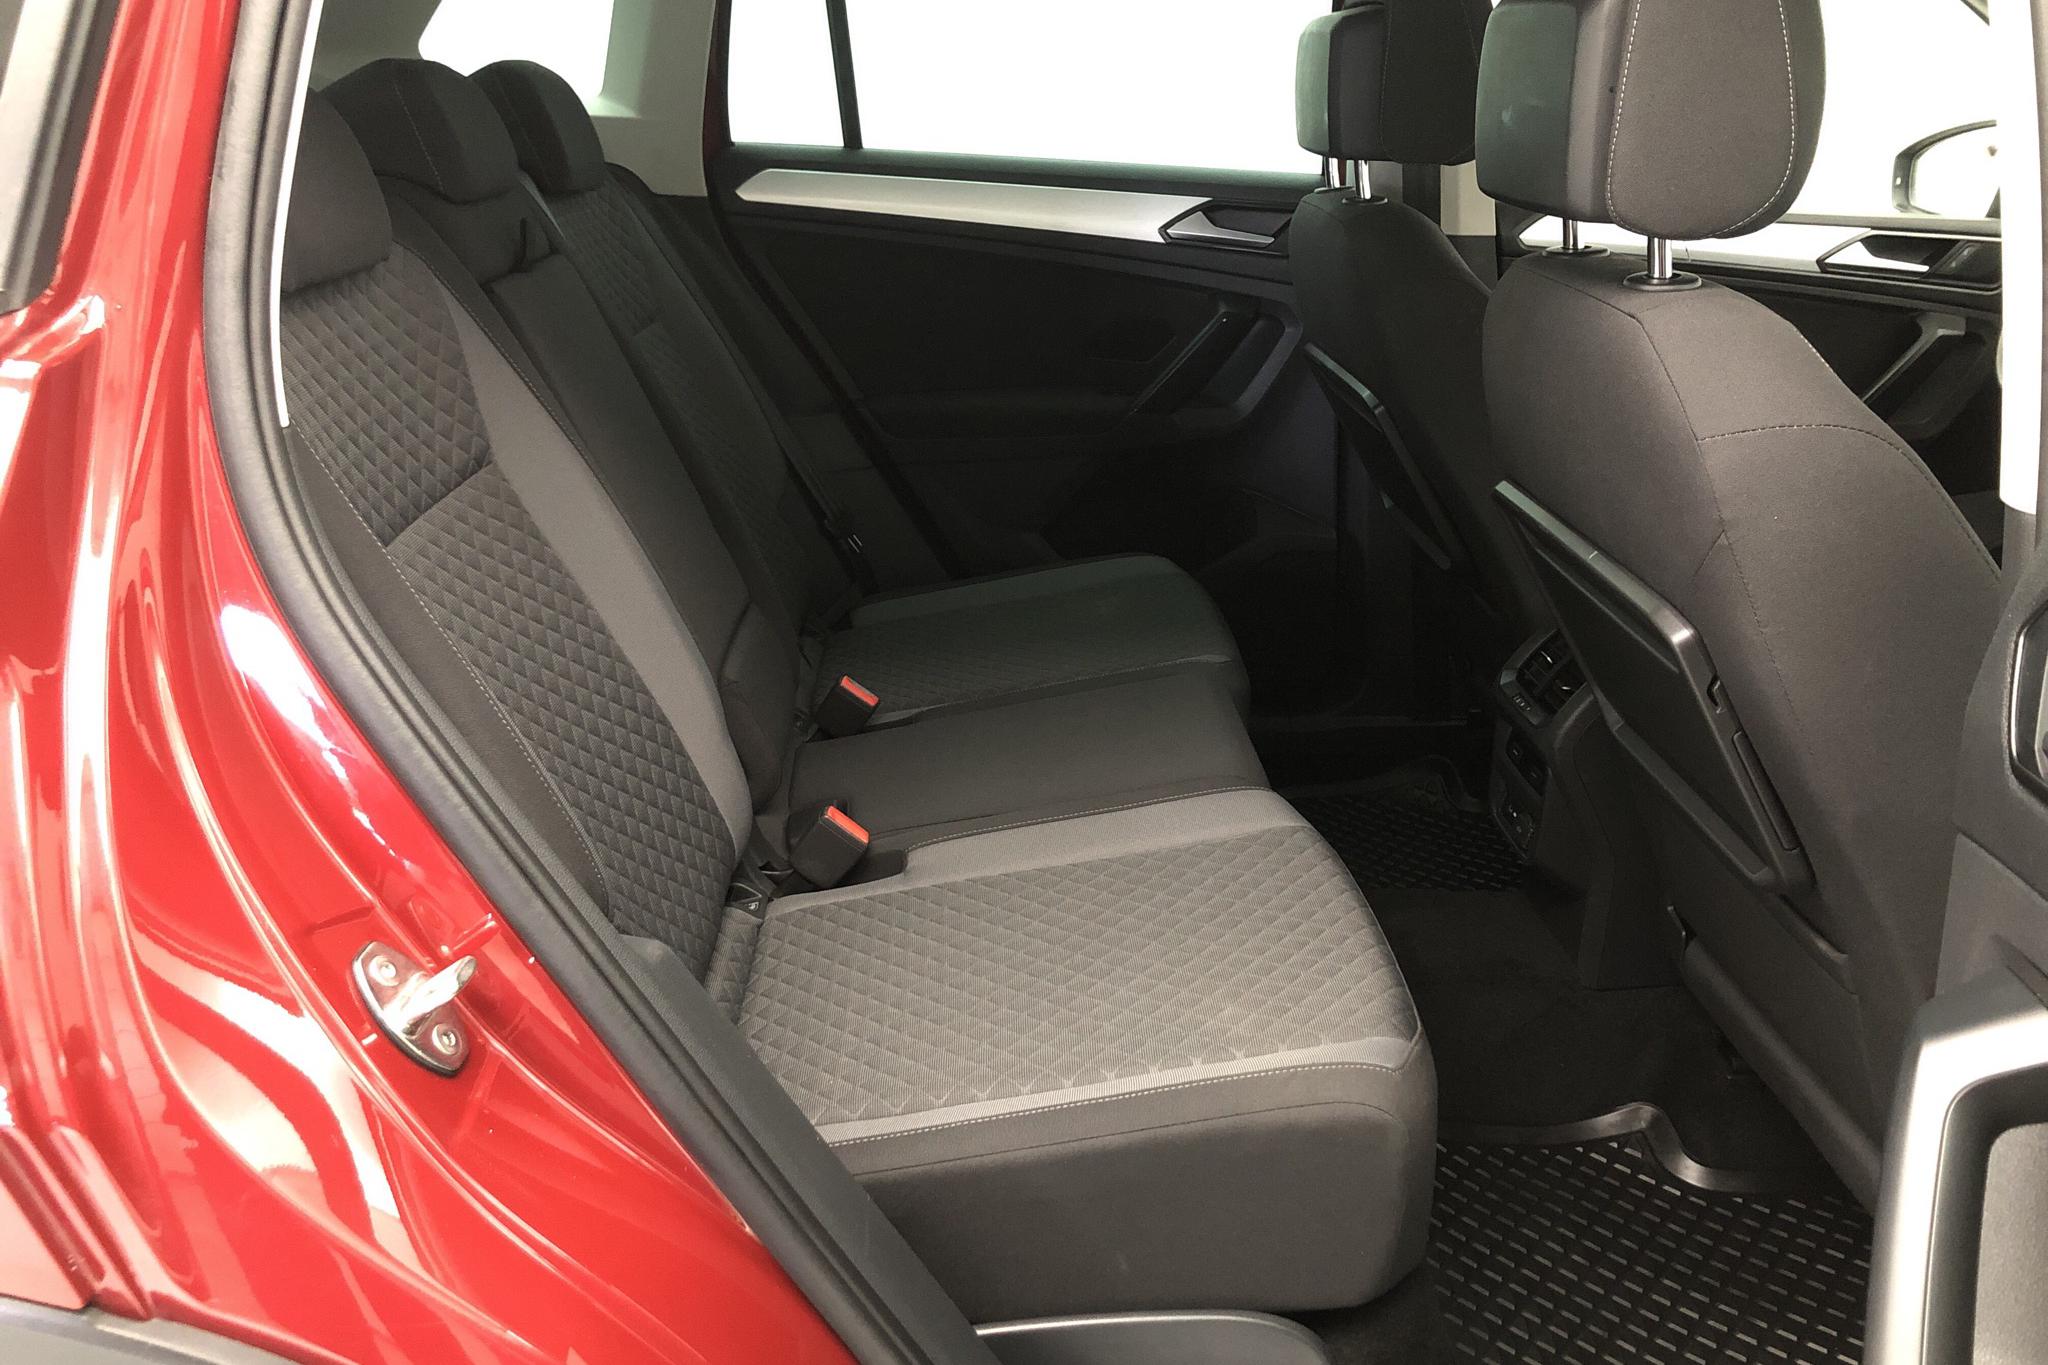 VW Tiguan 1.4 TSI 4MOTION (150hk) - 58 640 km - Automatic - Dark Red - 2018